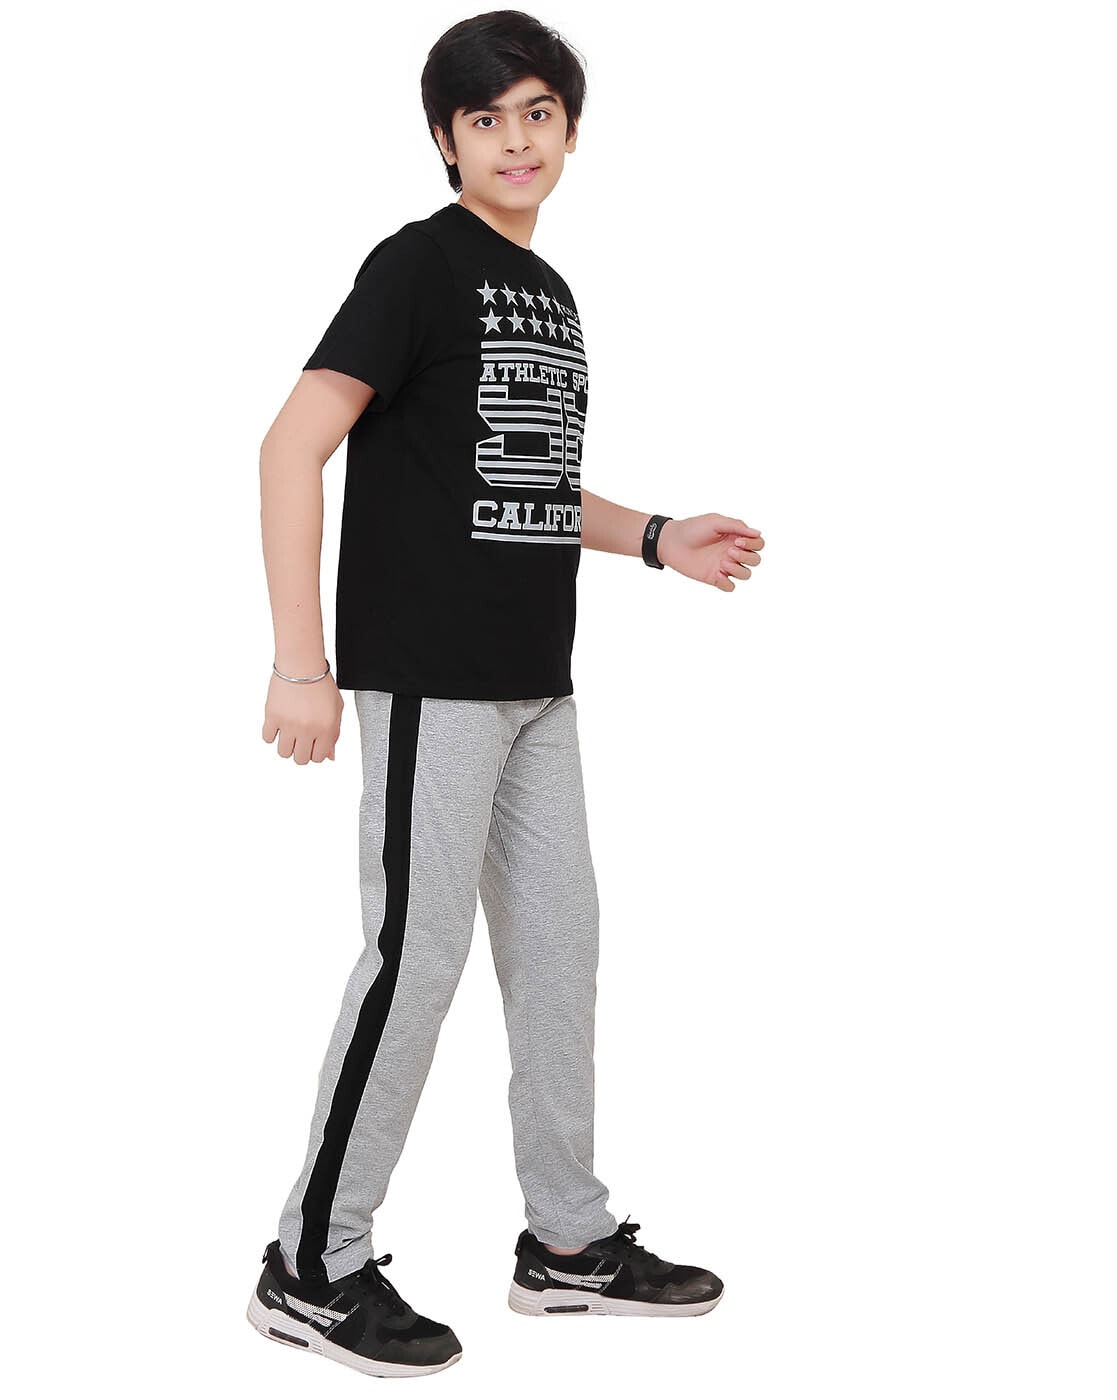 Amazon.com: Huggies Pull-Ups Nighttime Training Pants - Boys - 3T-4T - 44  ct : Baby